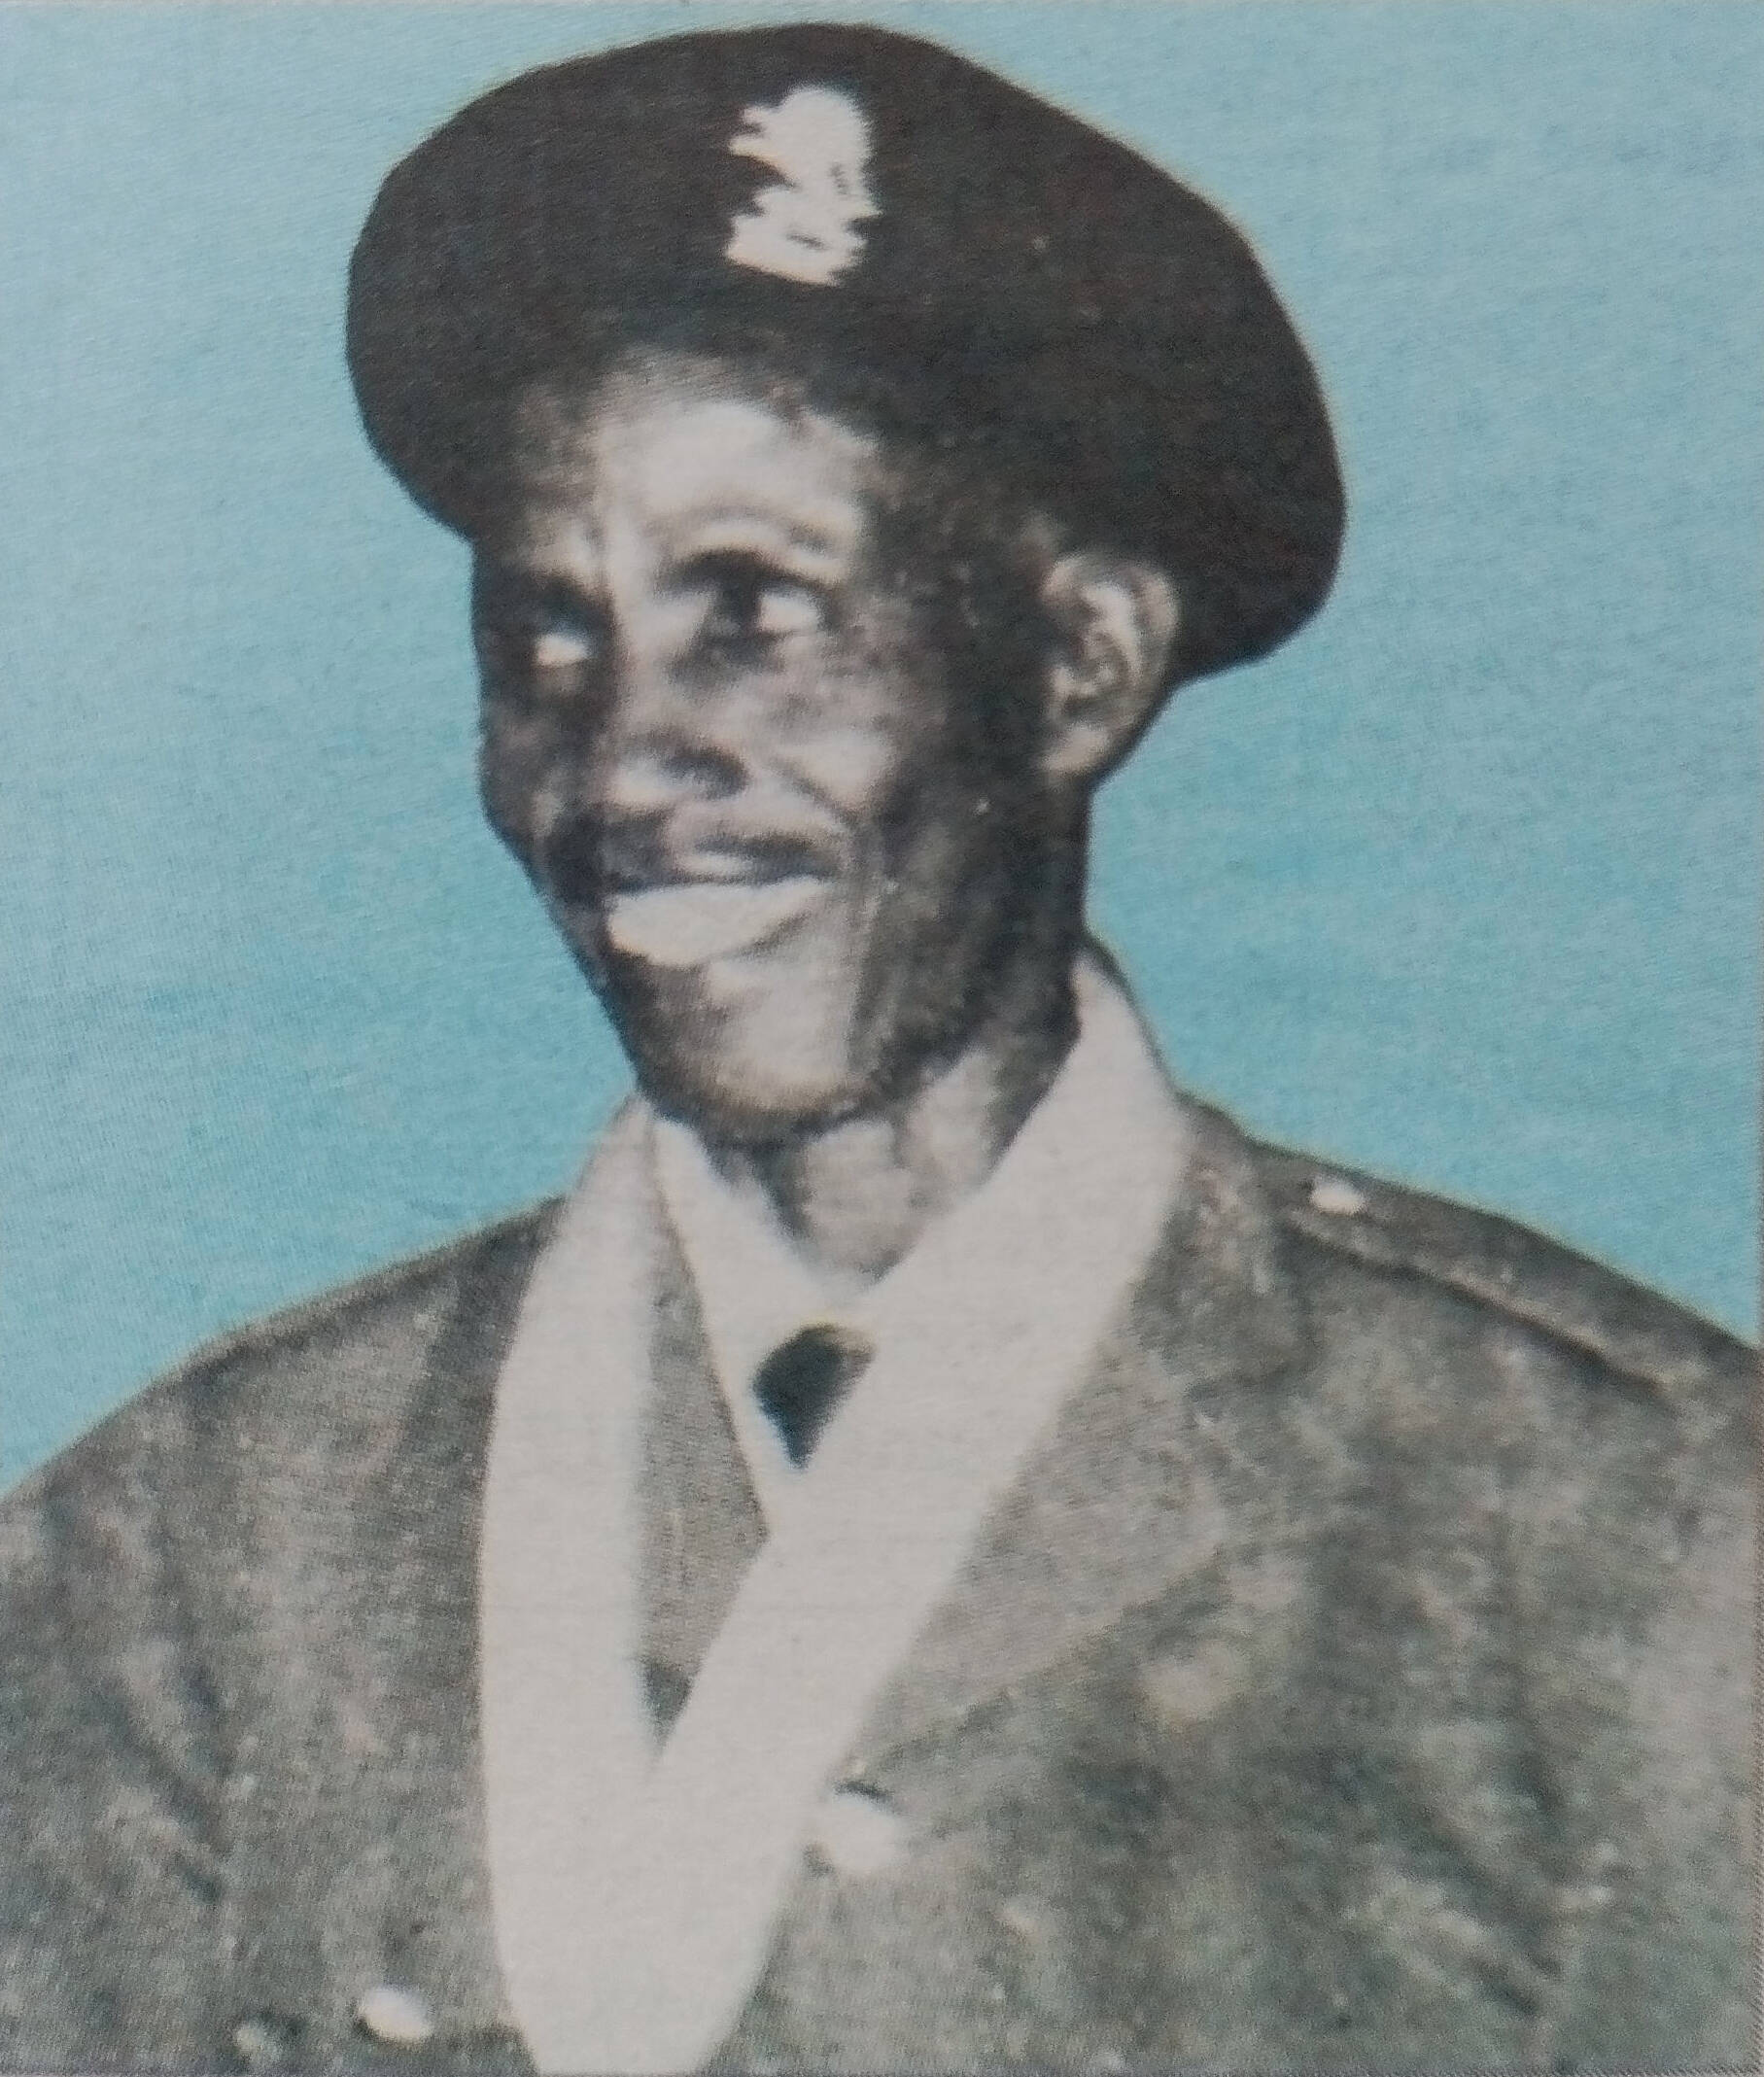 Obituary Image of Chief Mwalimu Ali Godoro 1917 - 28th April ,1967